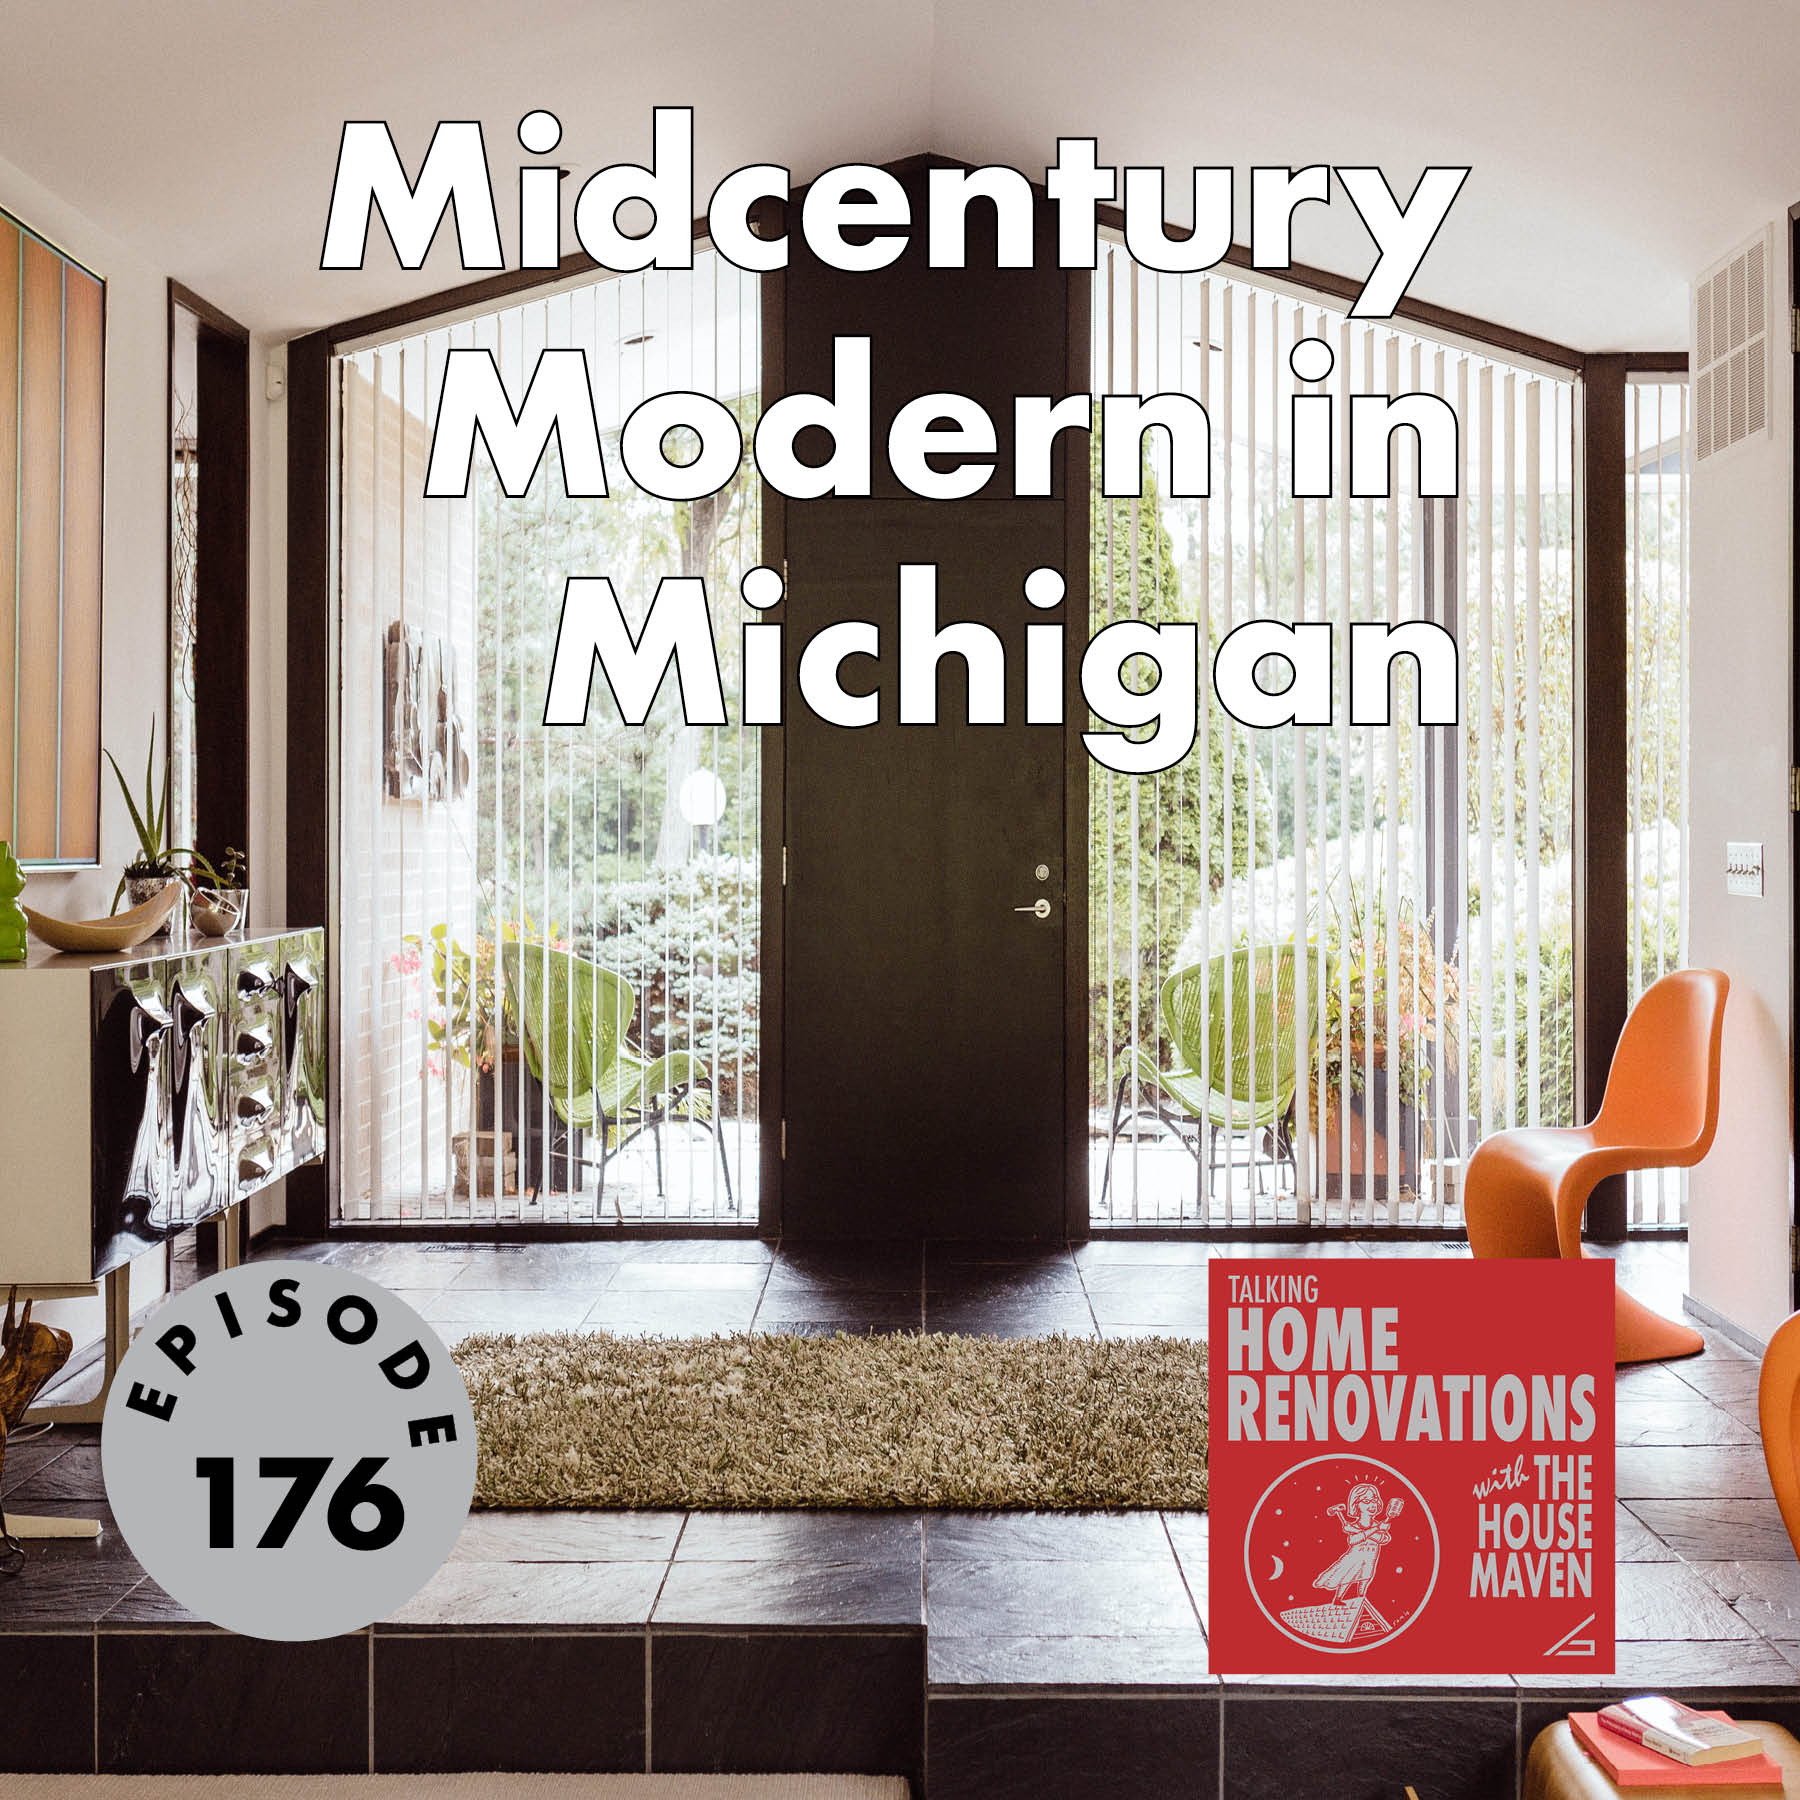 Midcentury Modern in Michigan